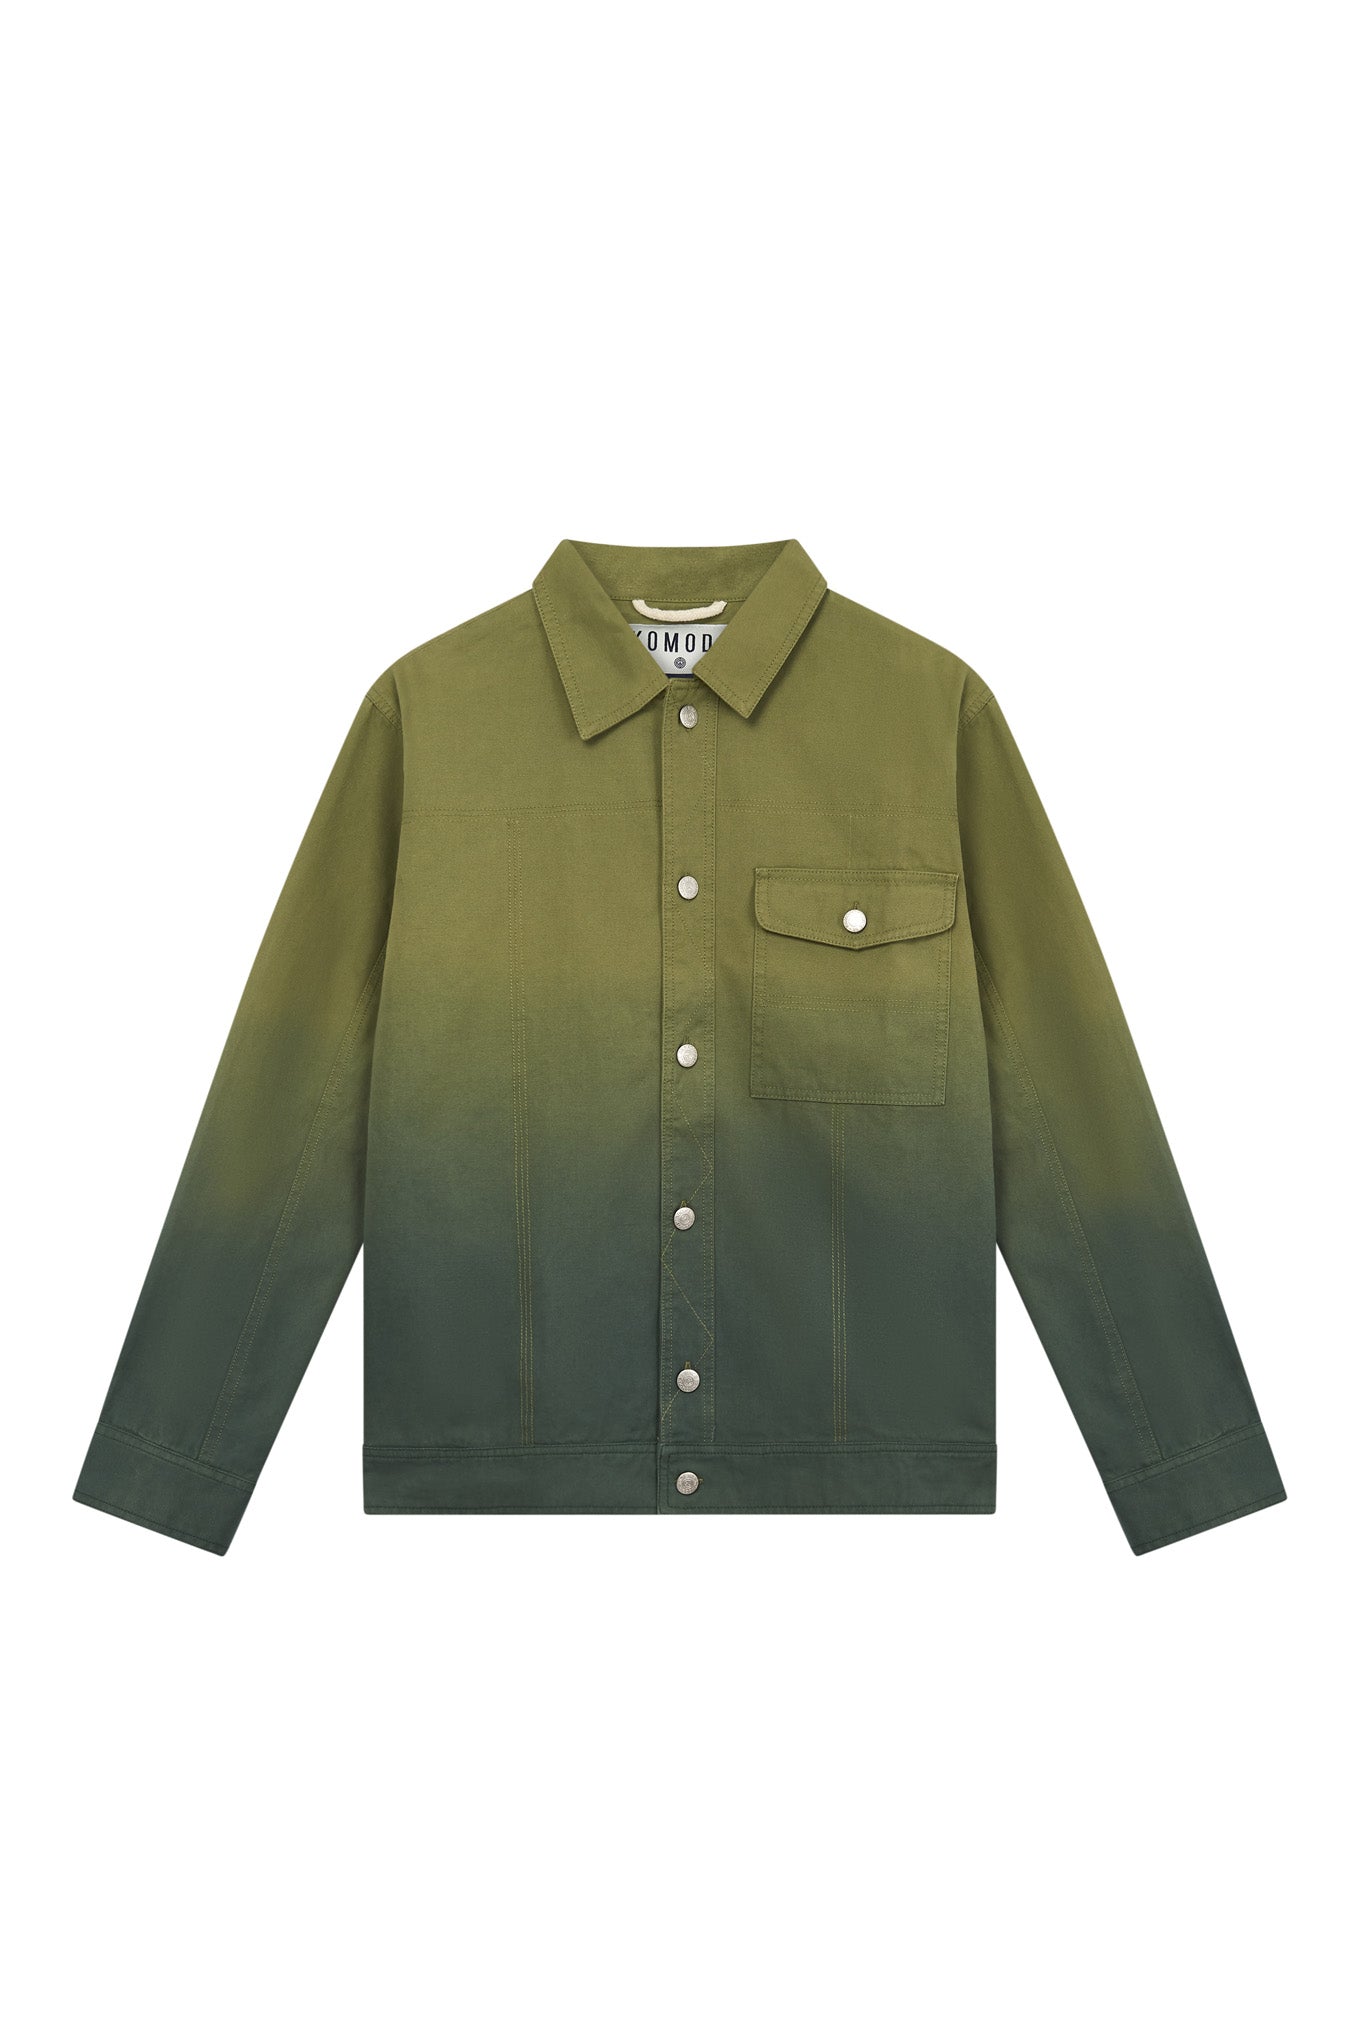 ORINO Dip Dyed Womens Jacket - Khaki Green